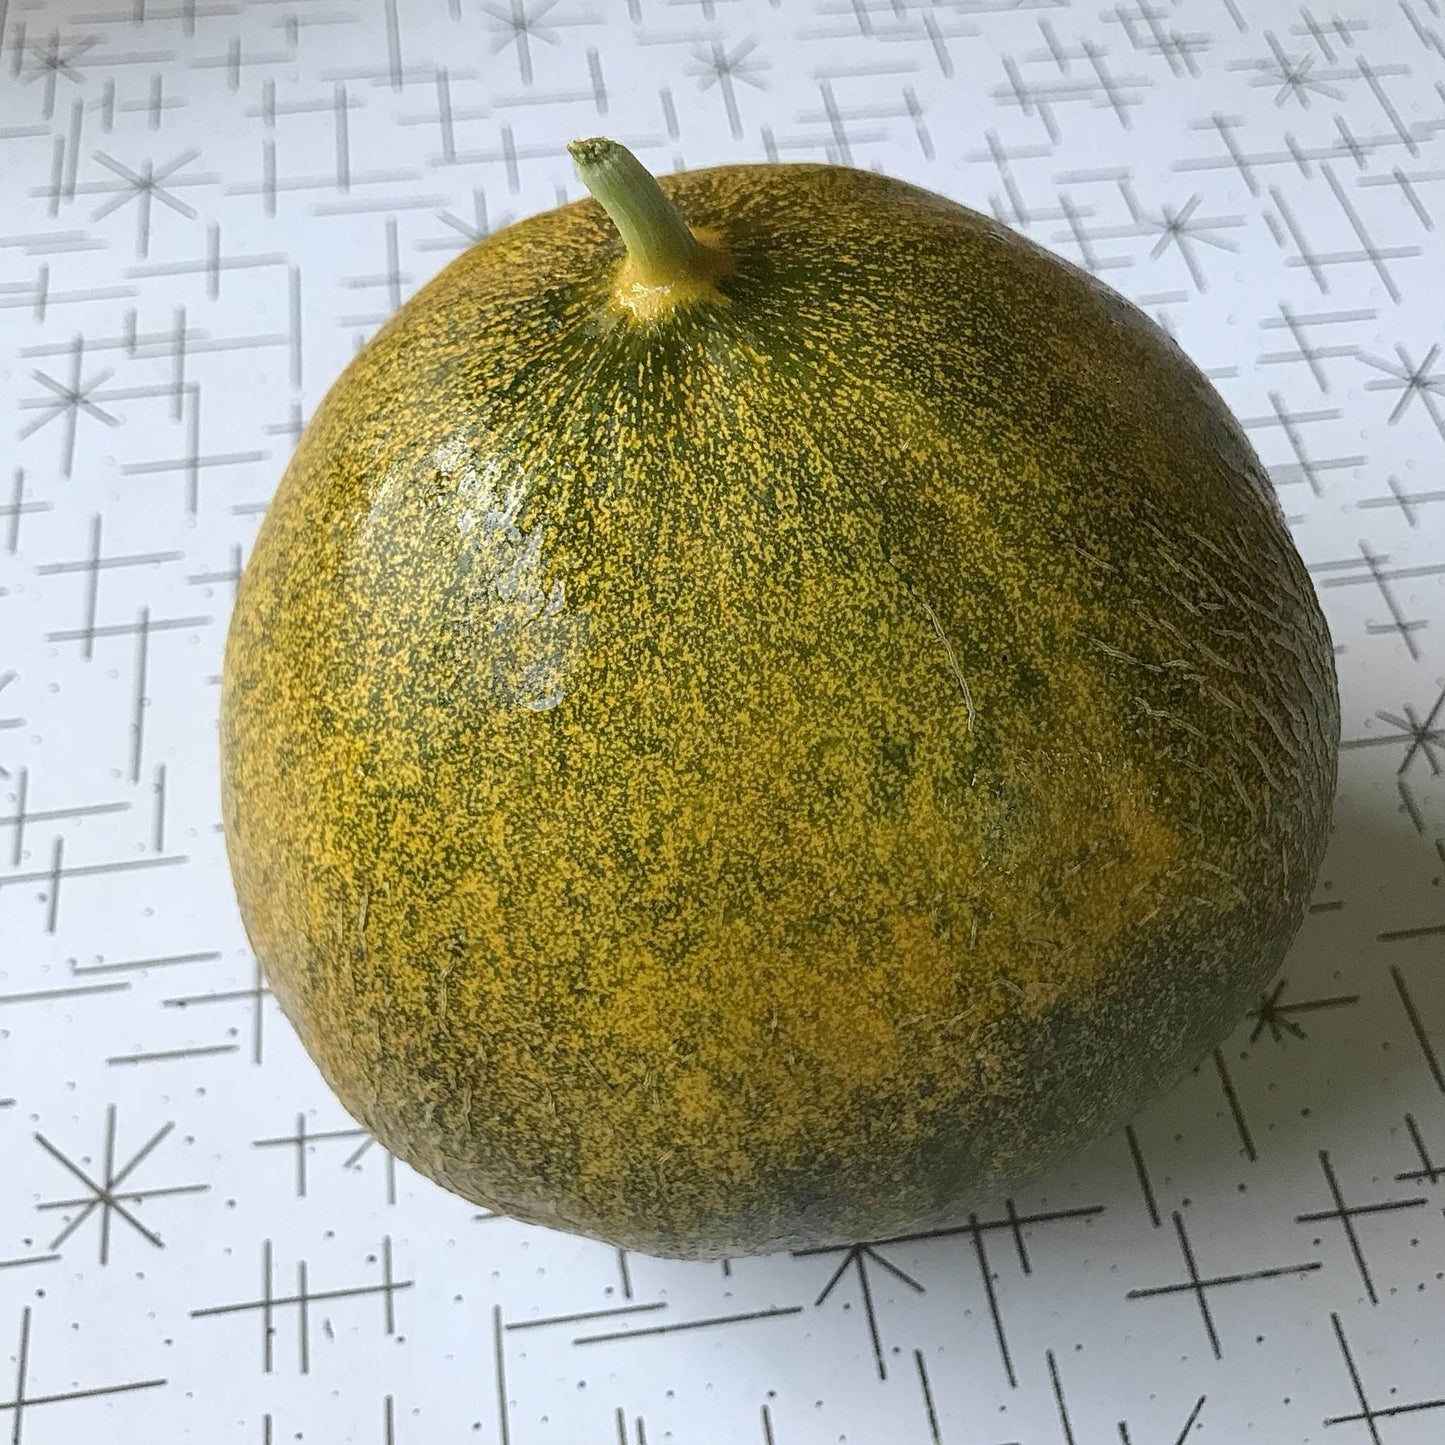 partially netted kherson market melon